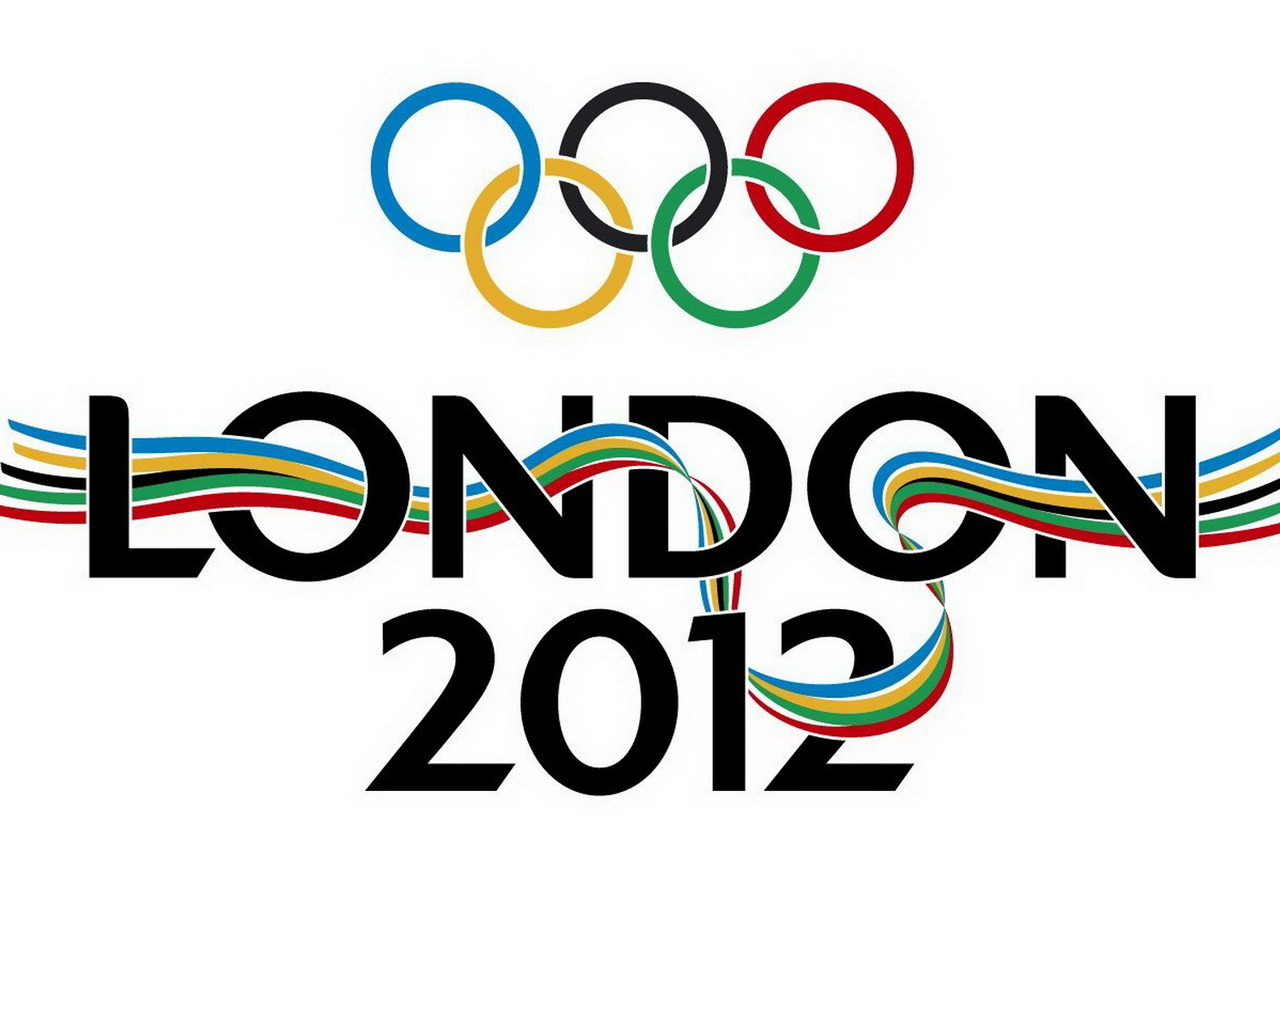 2012 Olympics